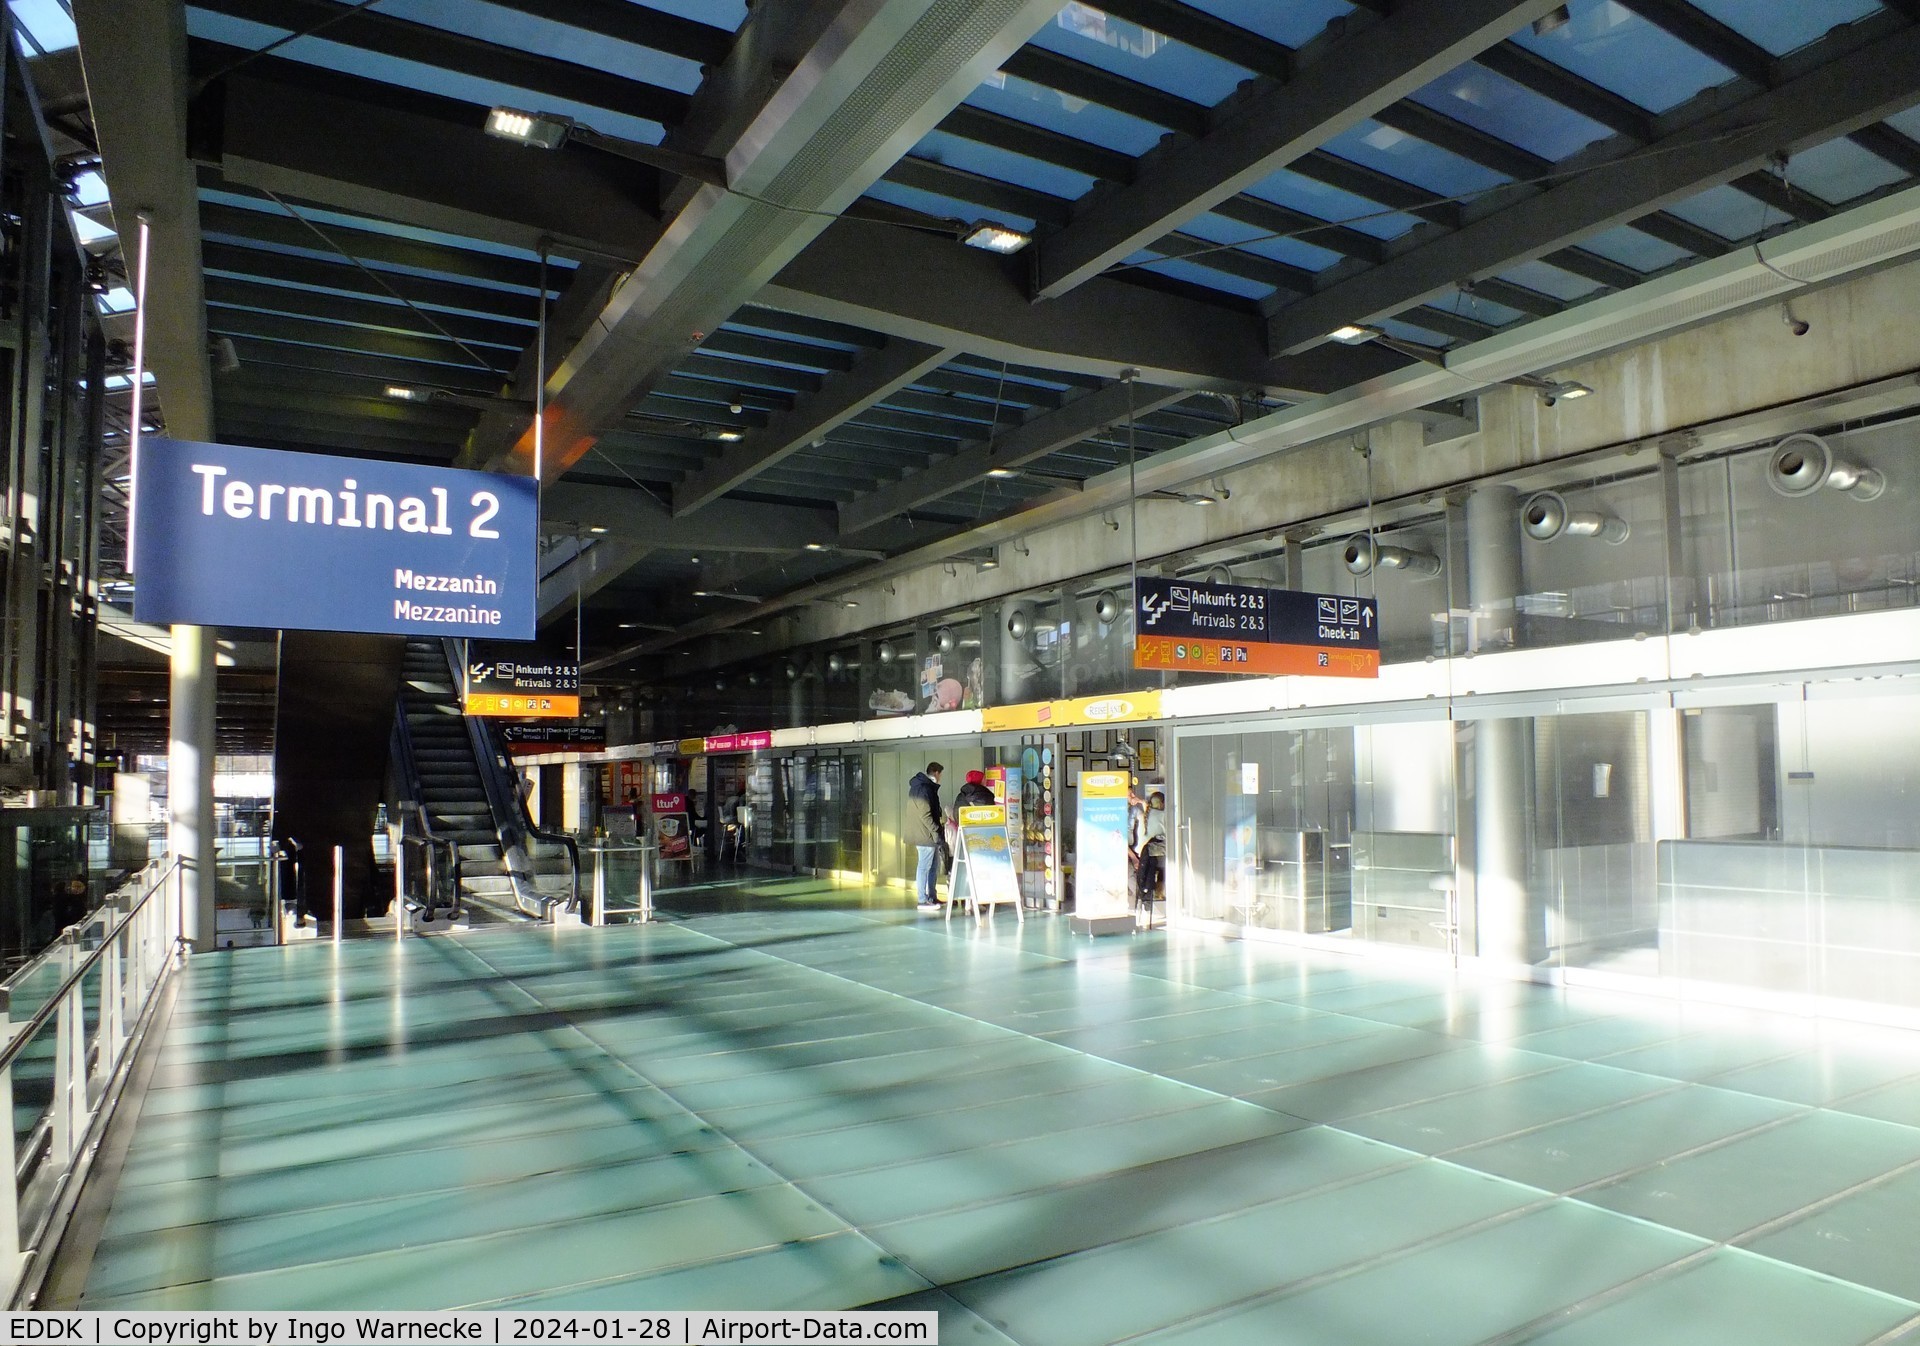 Cologne Bonn Airport, Cologne/Bonn Germany (EDDK) - inside the mezzanine level of terminal 2 at Köln/Bonn airport